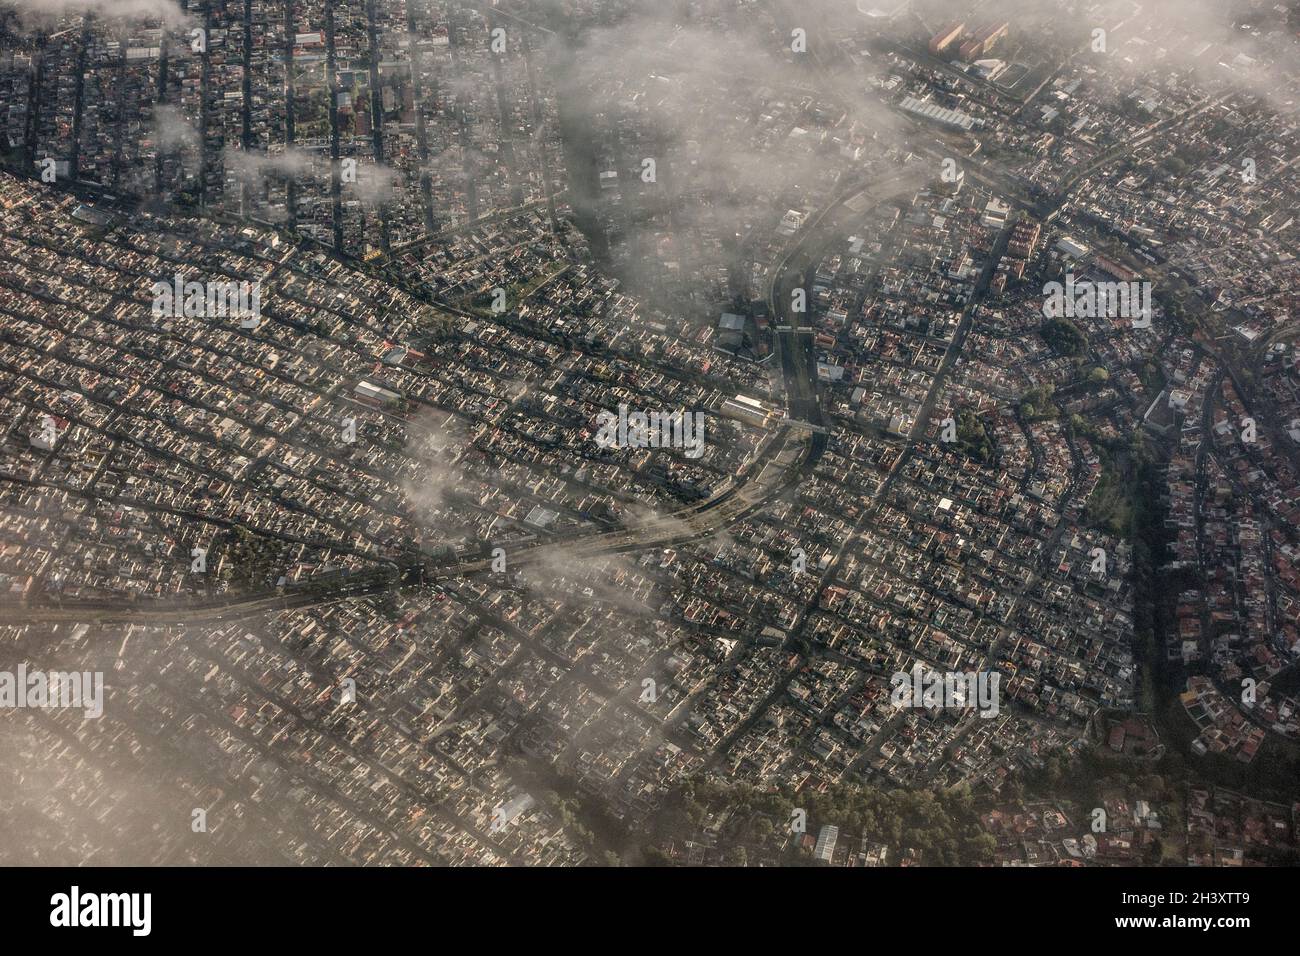 Mexico City aerial seen through hazy clouds Stock Photo